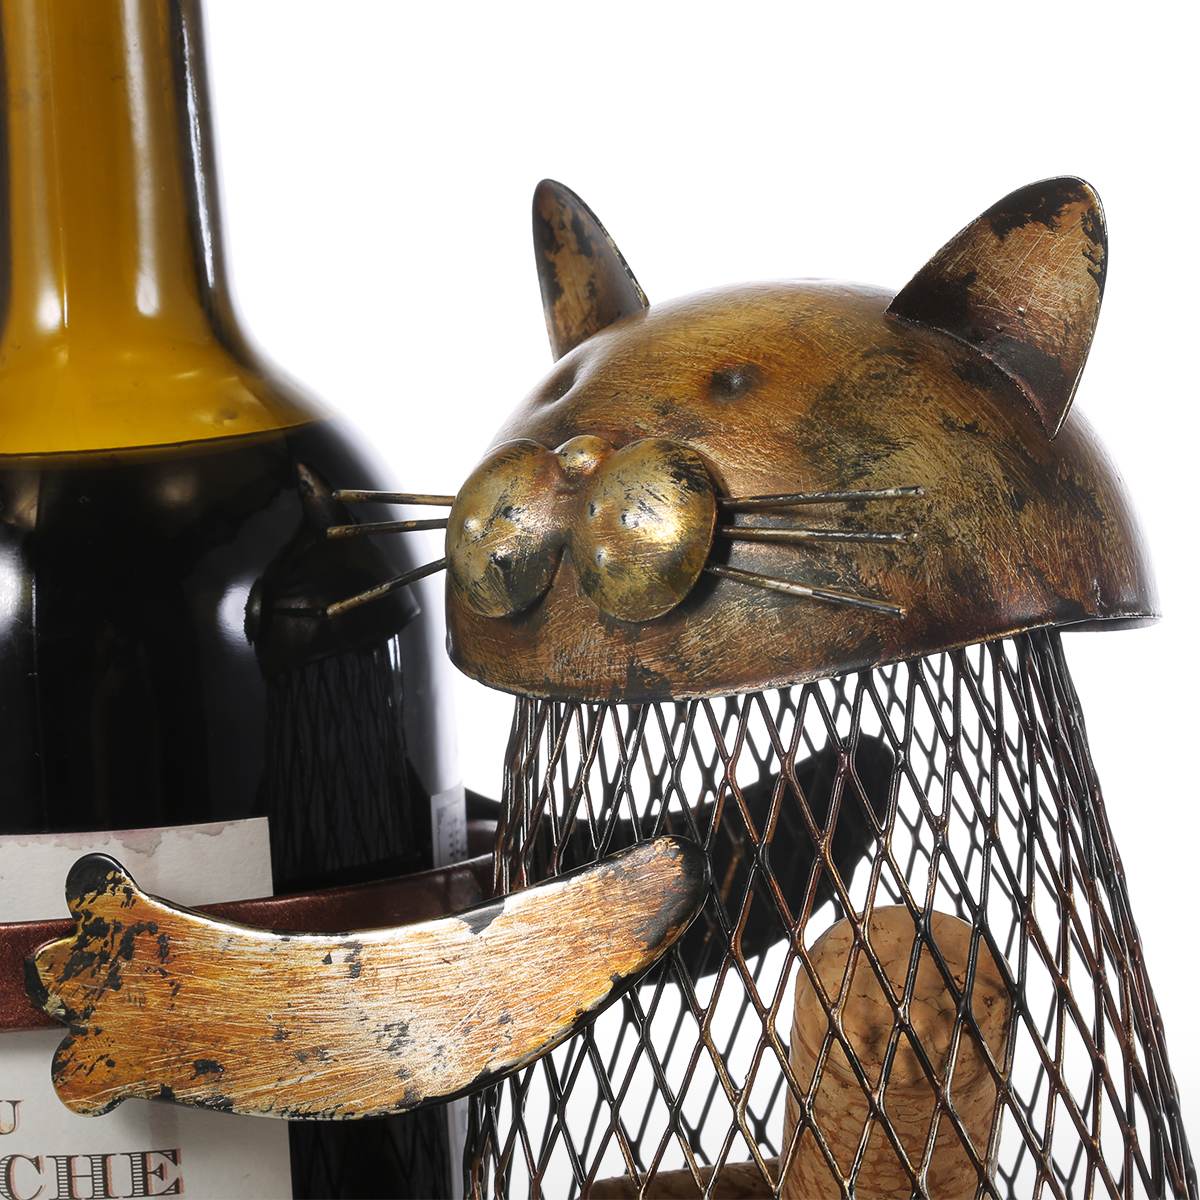 Tooarts Cat Wine Rack Cork Container Bottle Wine Holder Kitchen Bar Metal Wine Craft Christmas Handcraft Animal Wine Stand